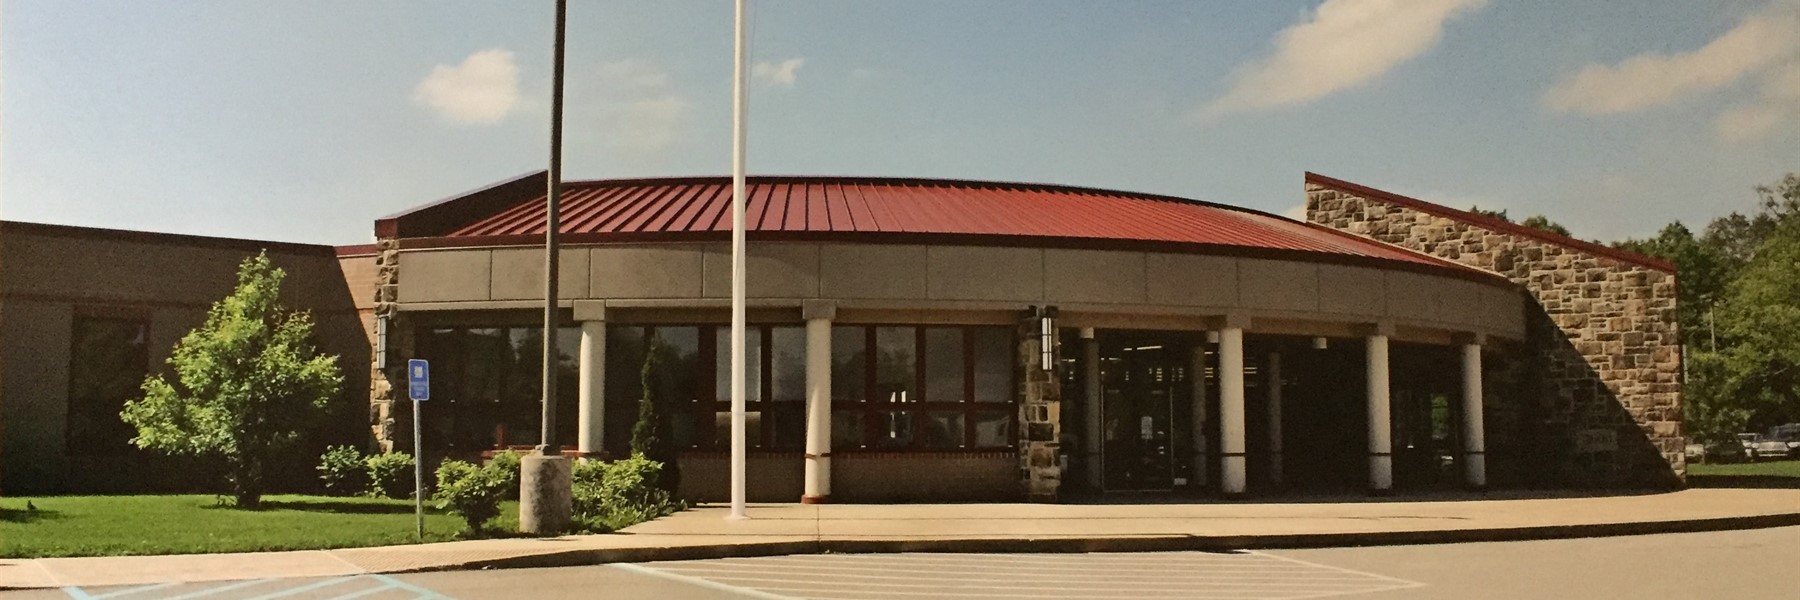 Buffalo Elementary School